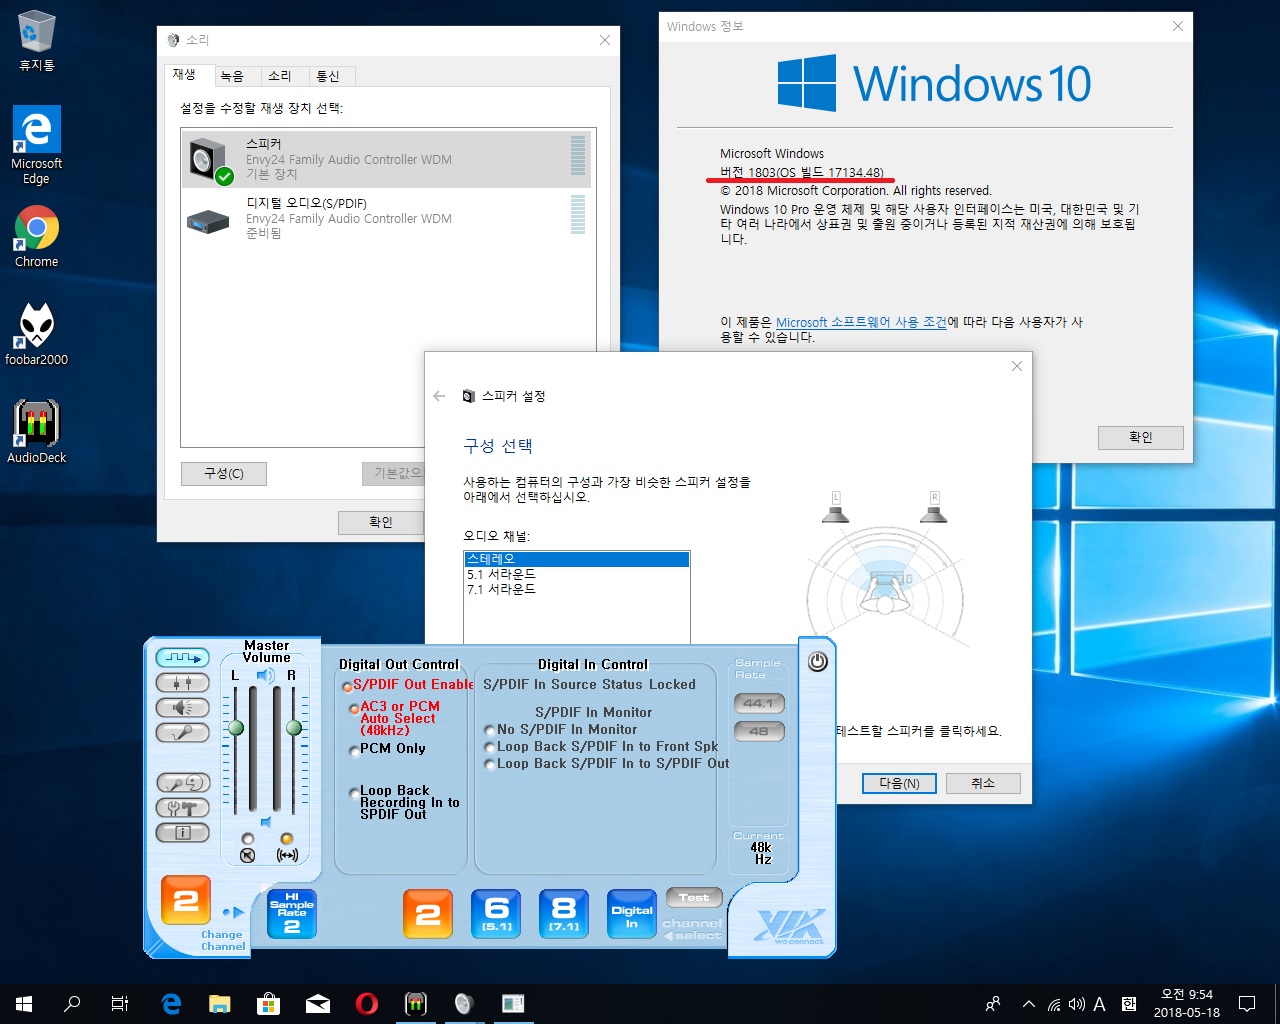 windows10_1803_build_17134.48.jpg